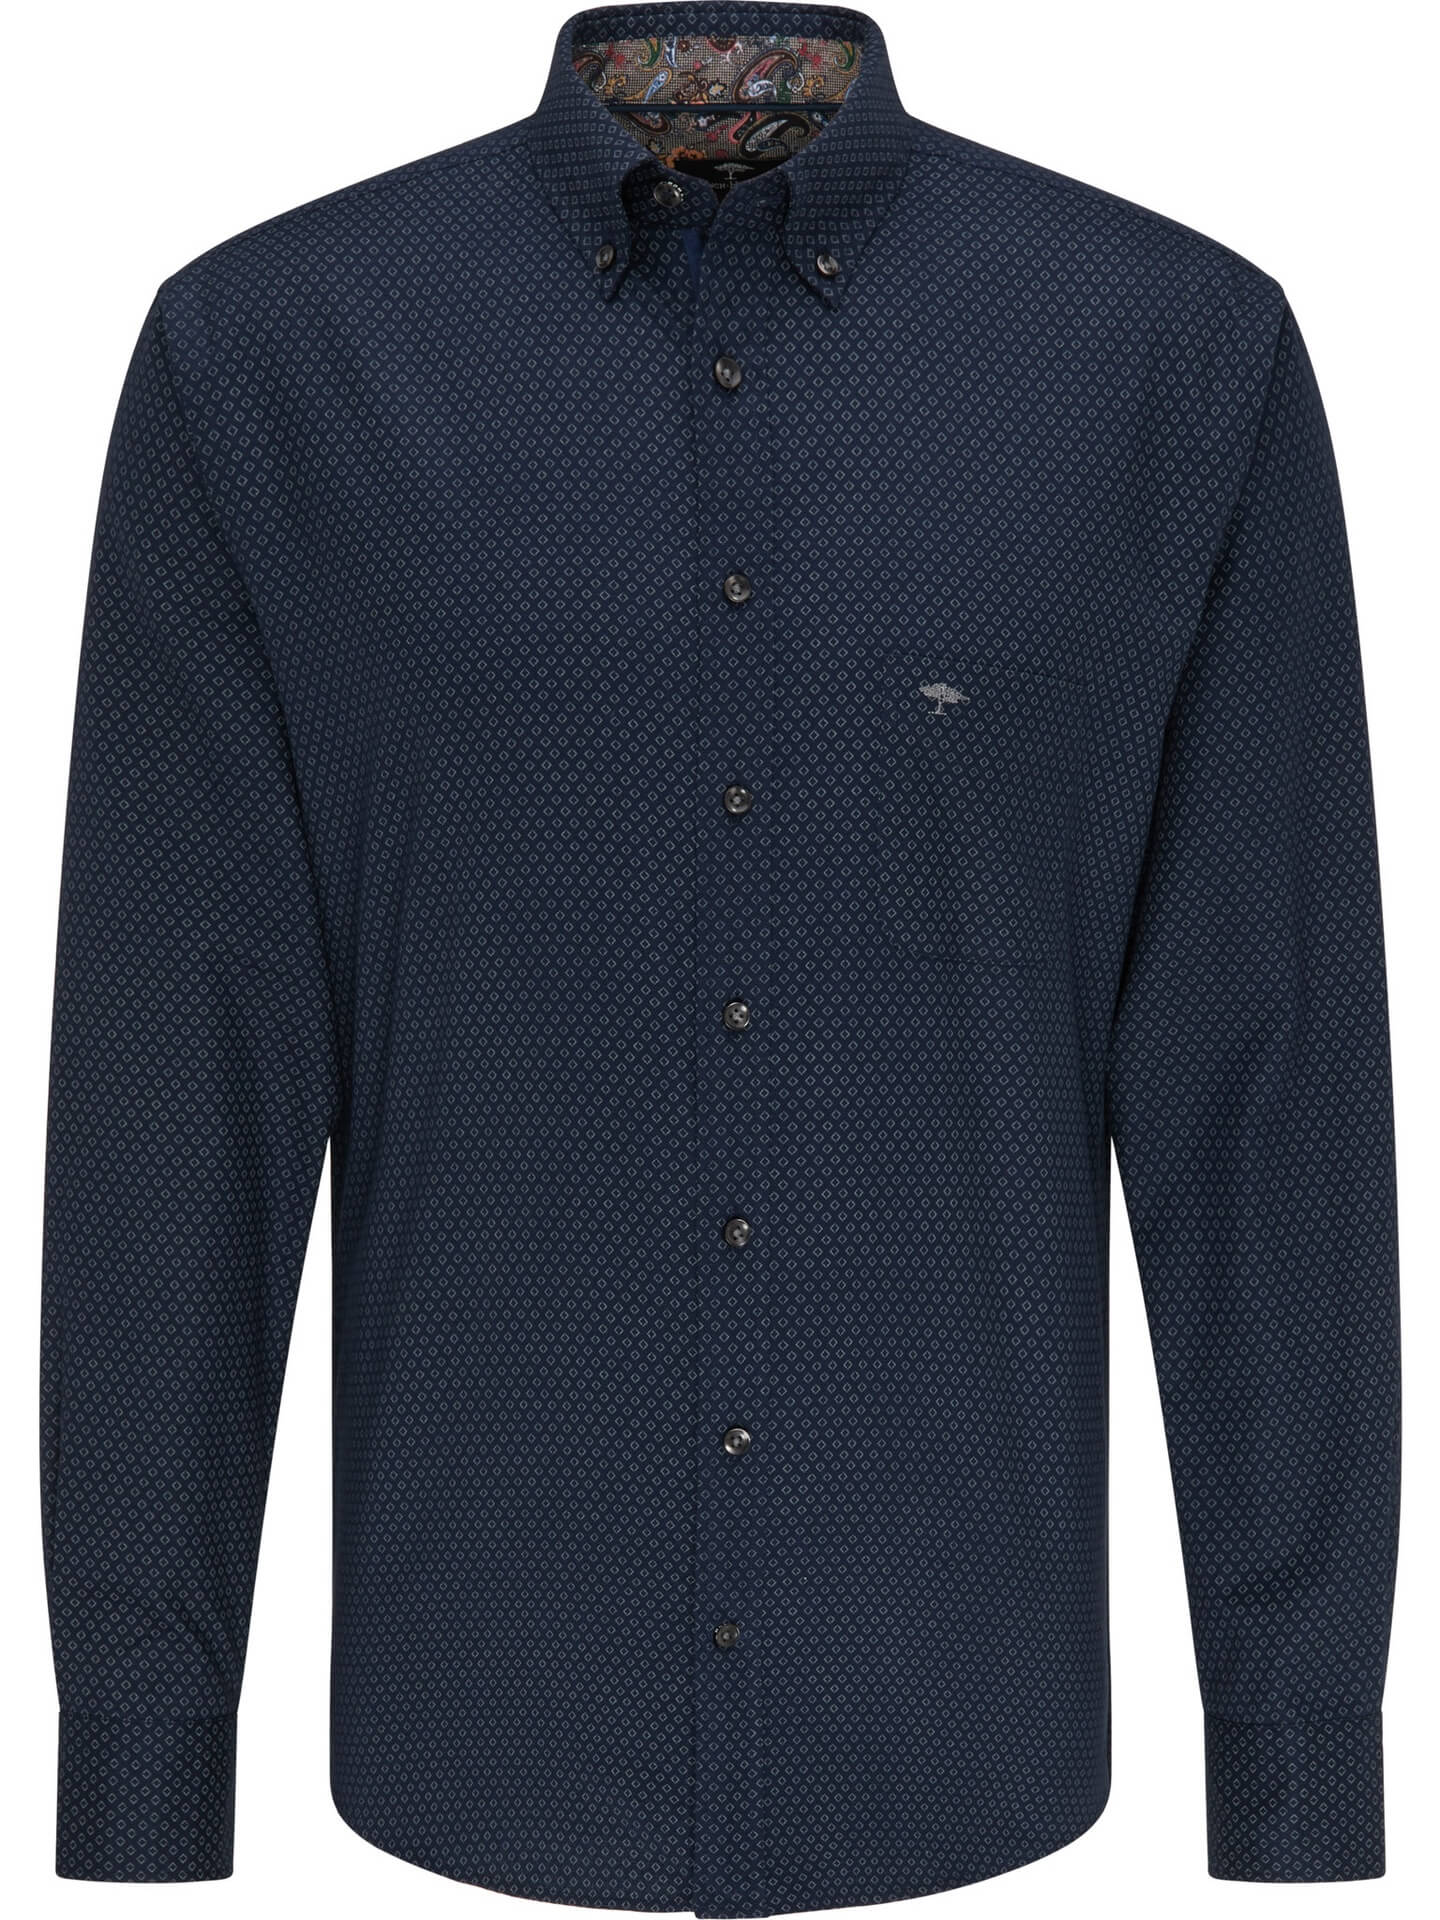 Fynch Hatton Navy Shirt with Pattern